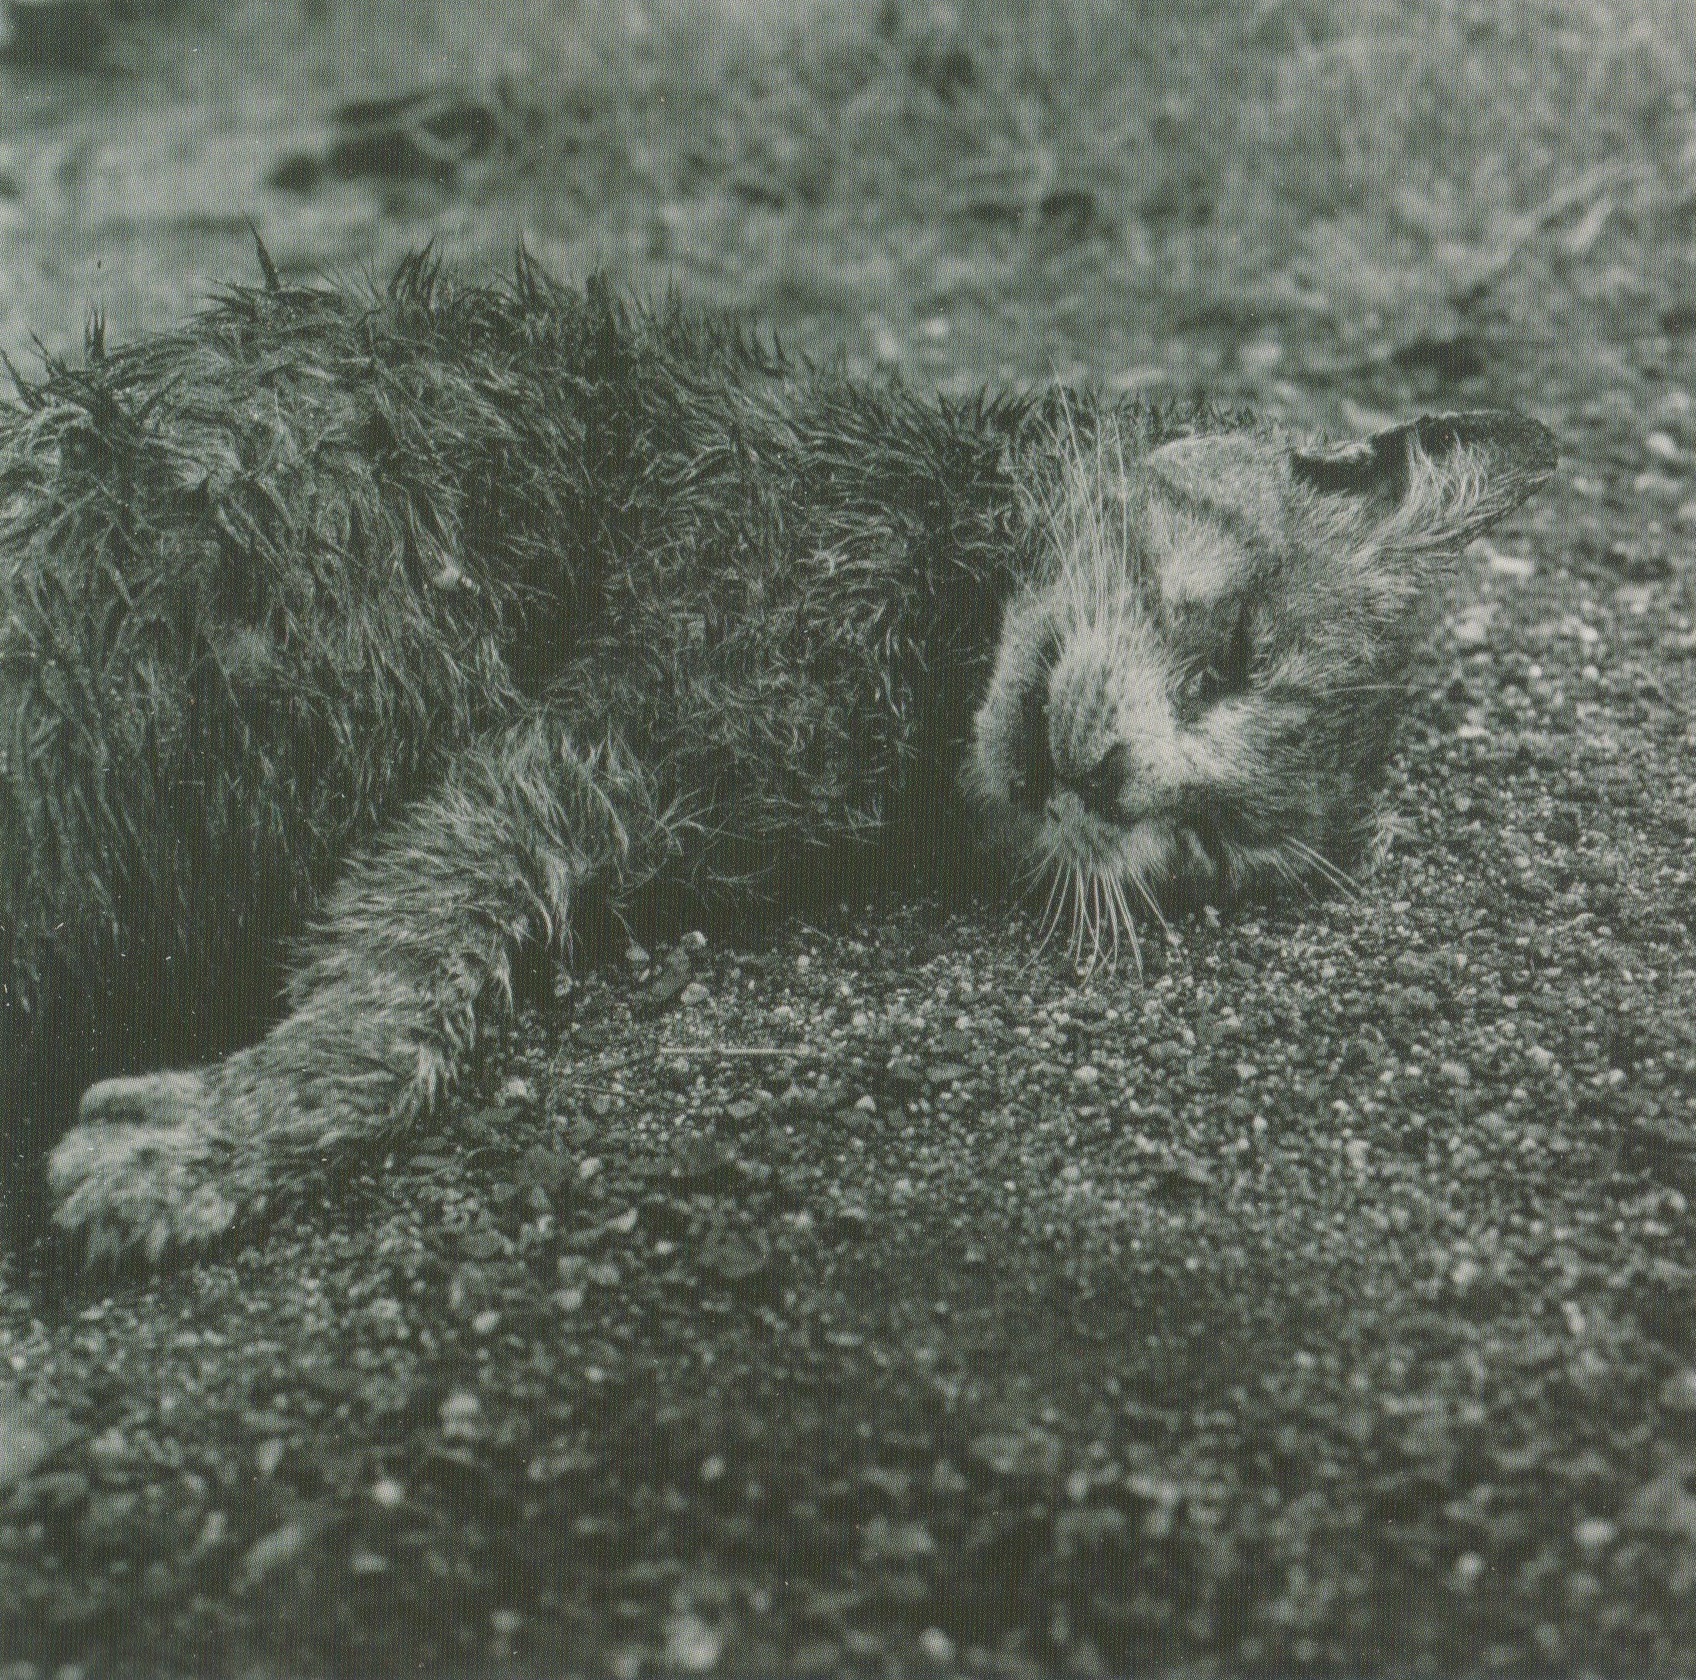 Peter Hujar, Dead Cat, 1984